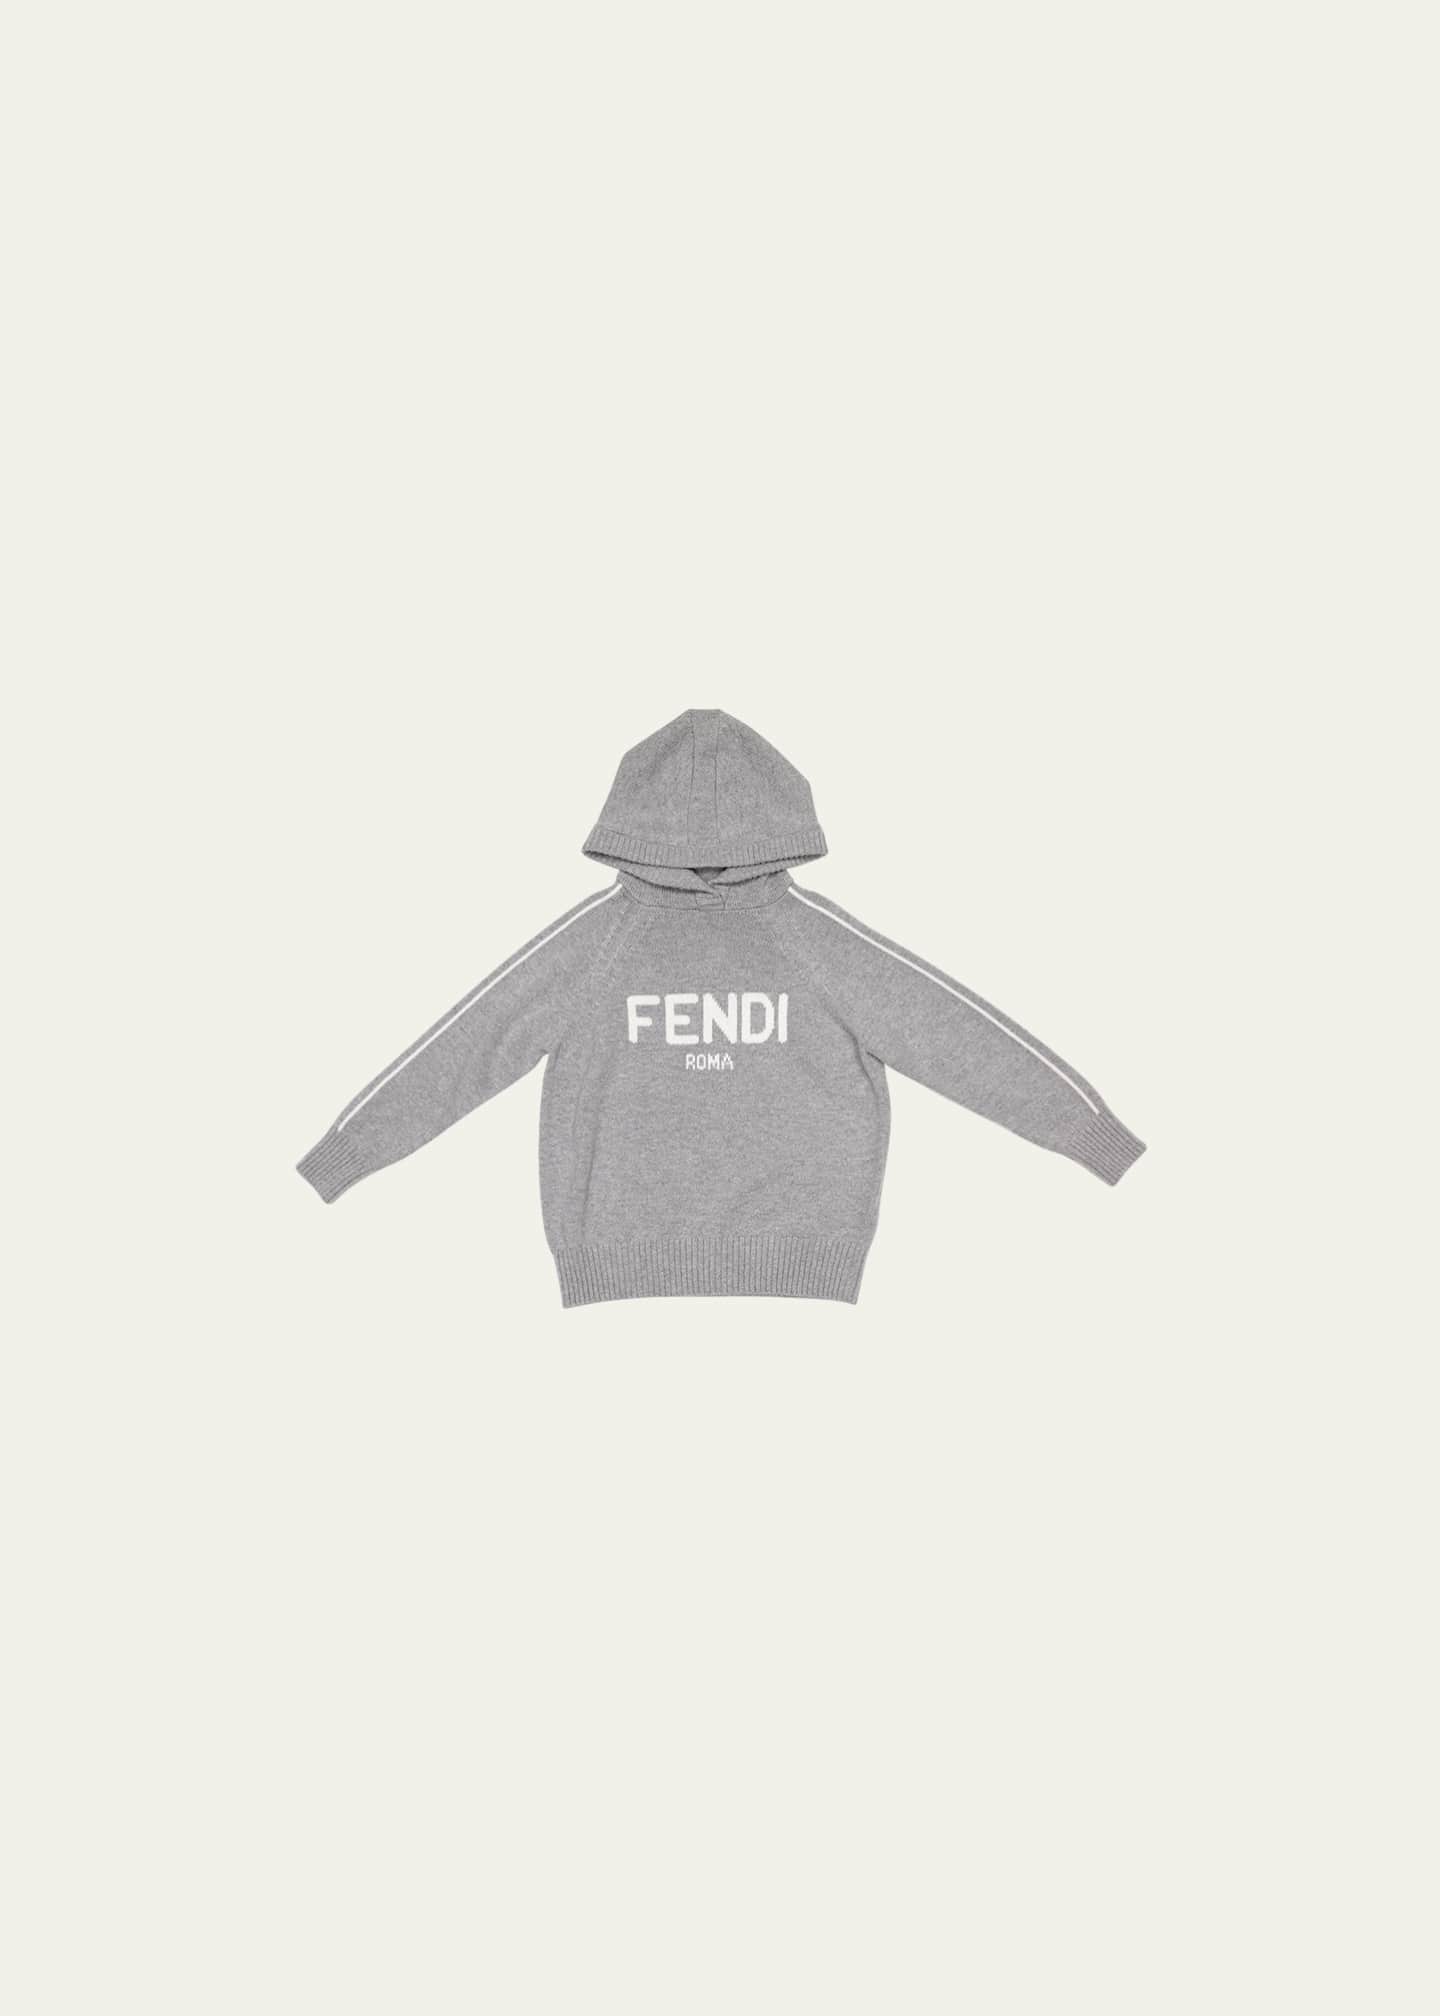 Fendi Boy's Large Logo Cashmere Hoodie, Size 8-14